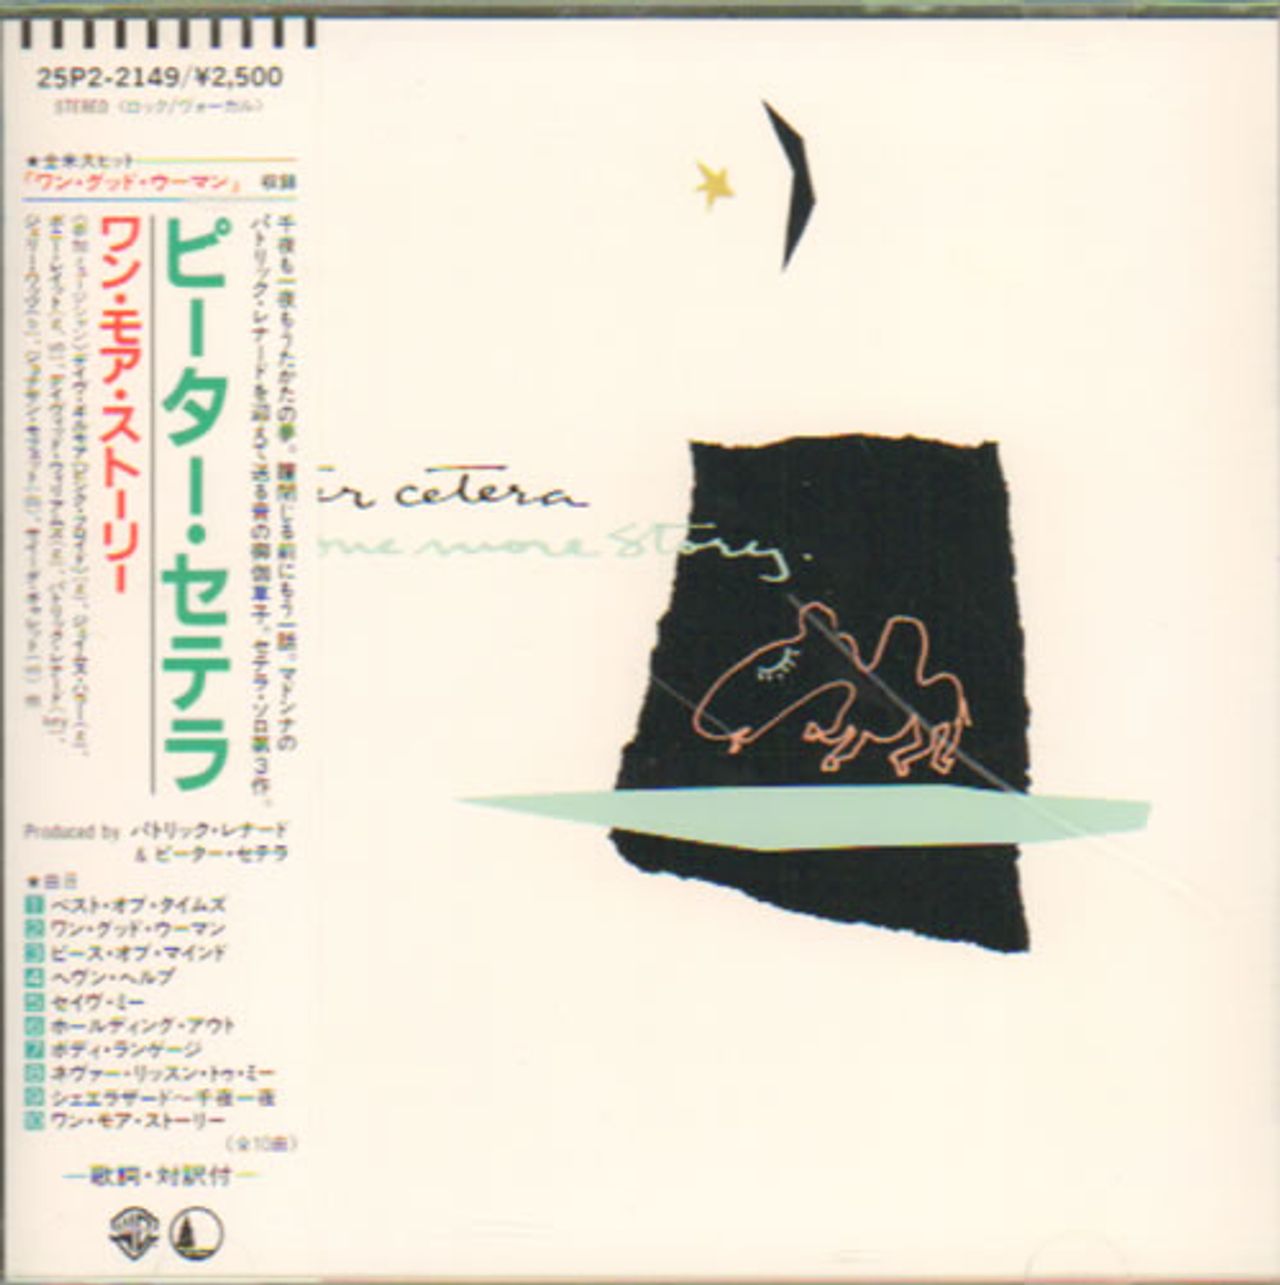 Peter Cetera One More Story Japanese Promo CD album (CDLP) 25P2-2149